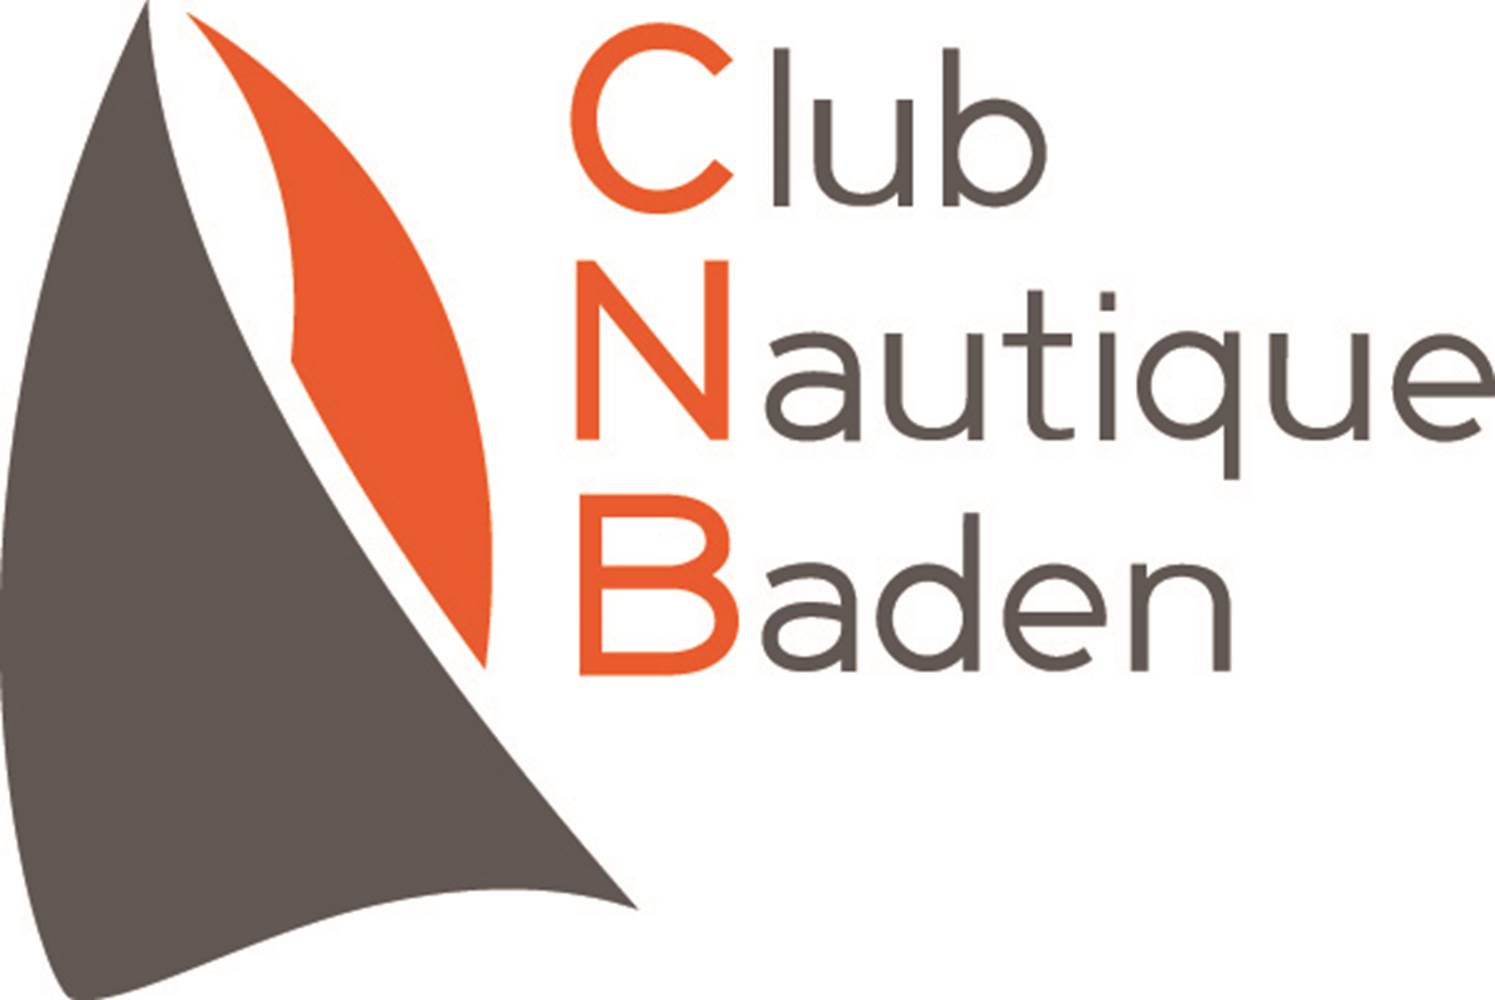 Club_nautique_de_baden © otac